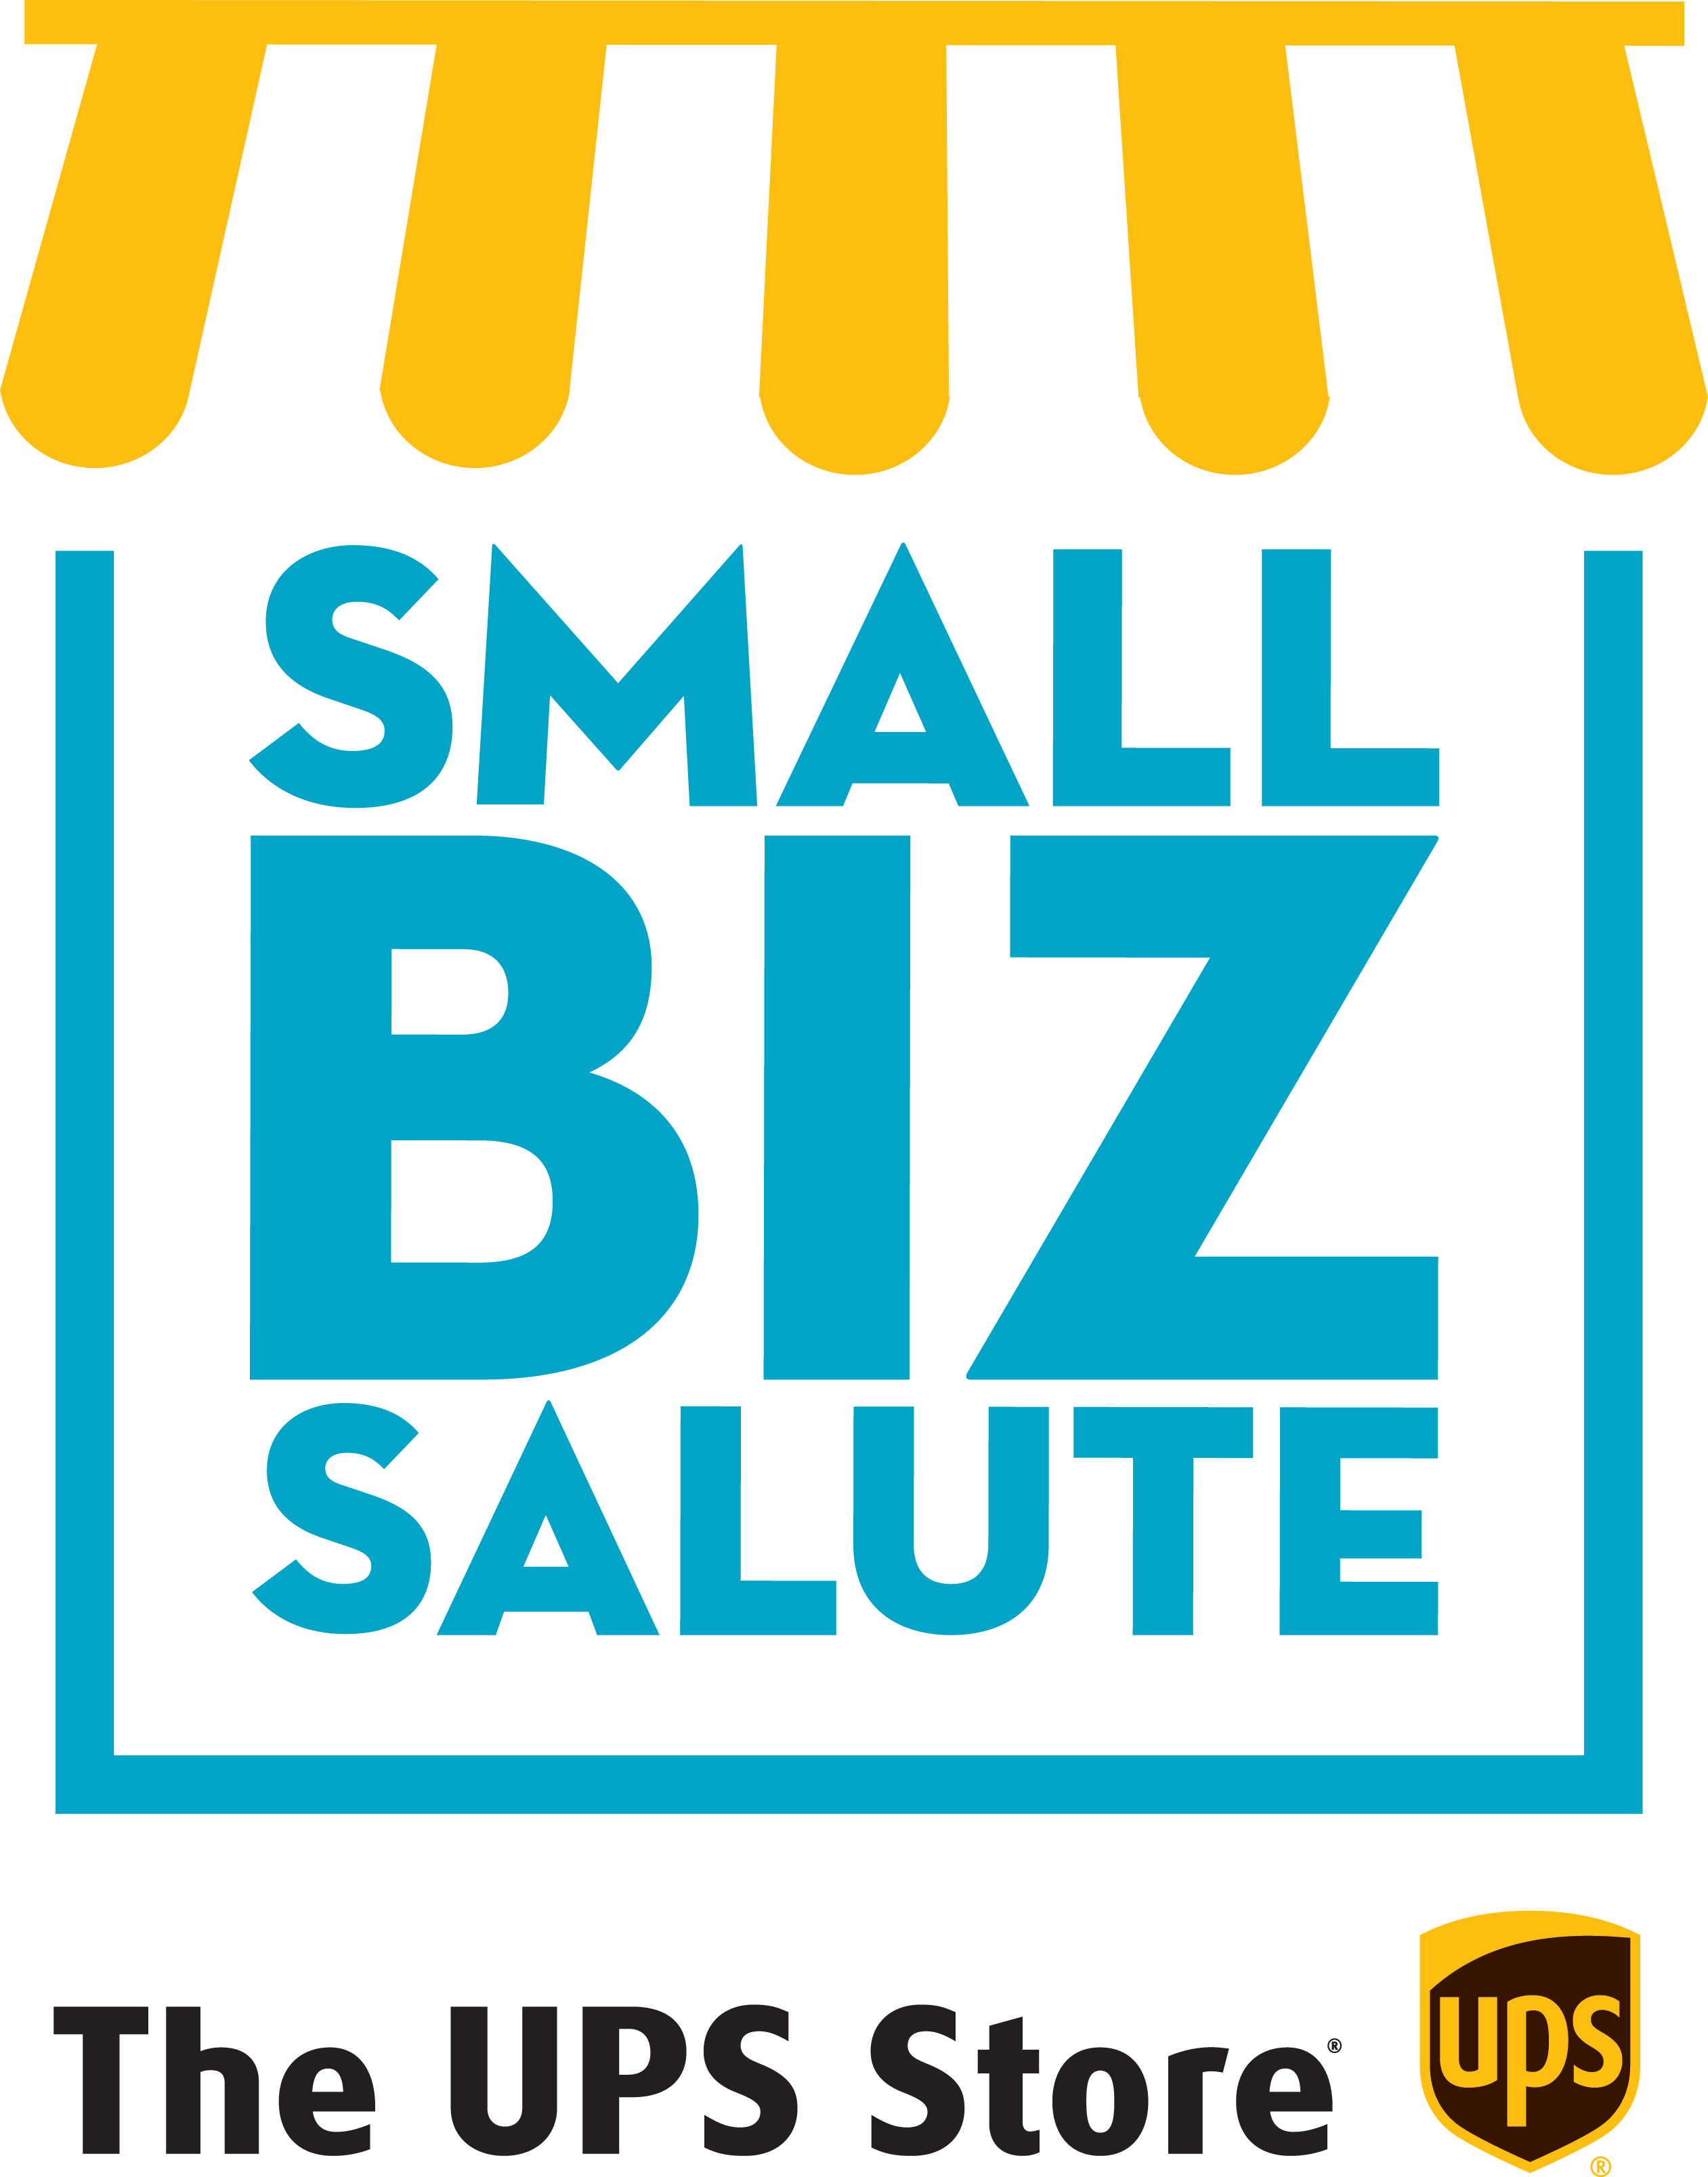 Small-Biz-Salute-Logo